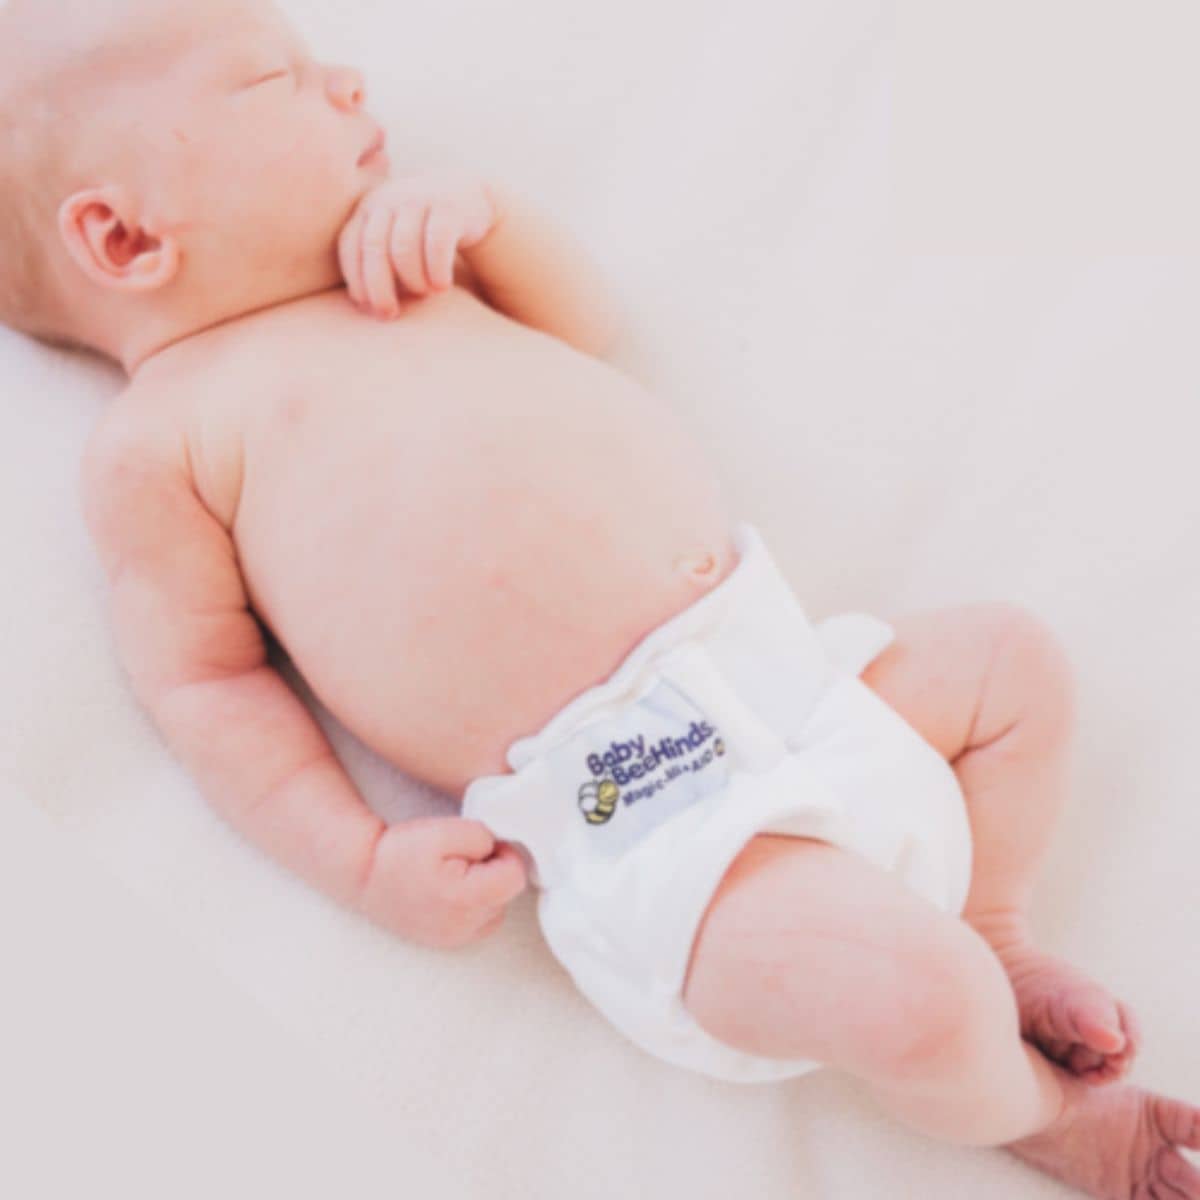 Baby BeeHinds Newborn AIO Cloth Nappy